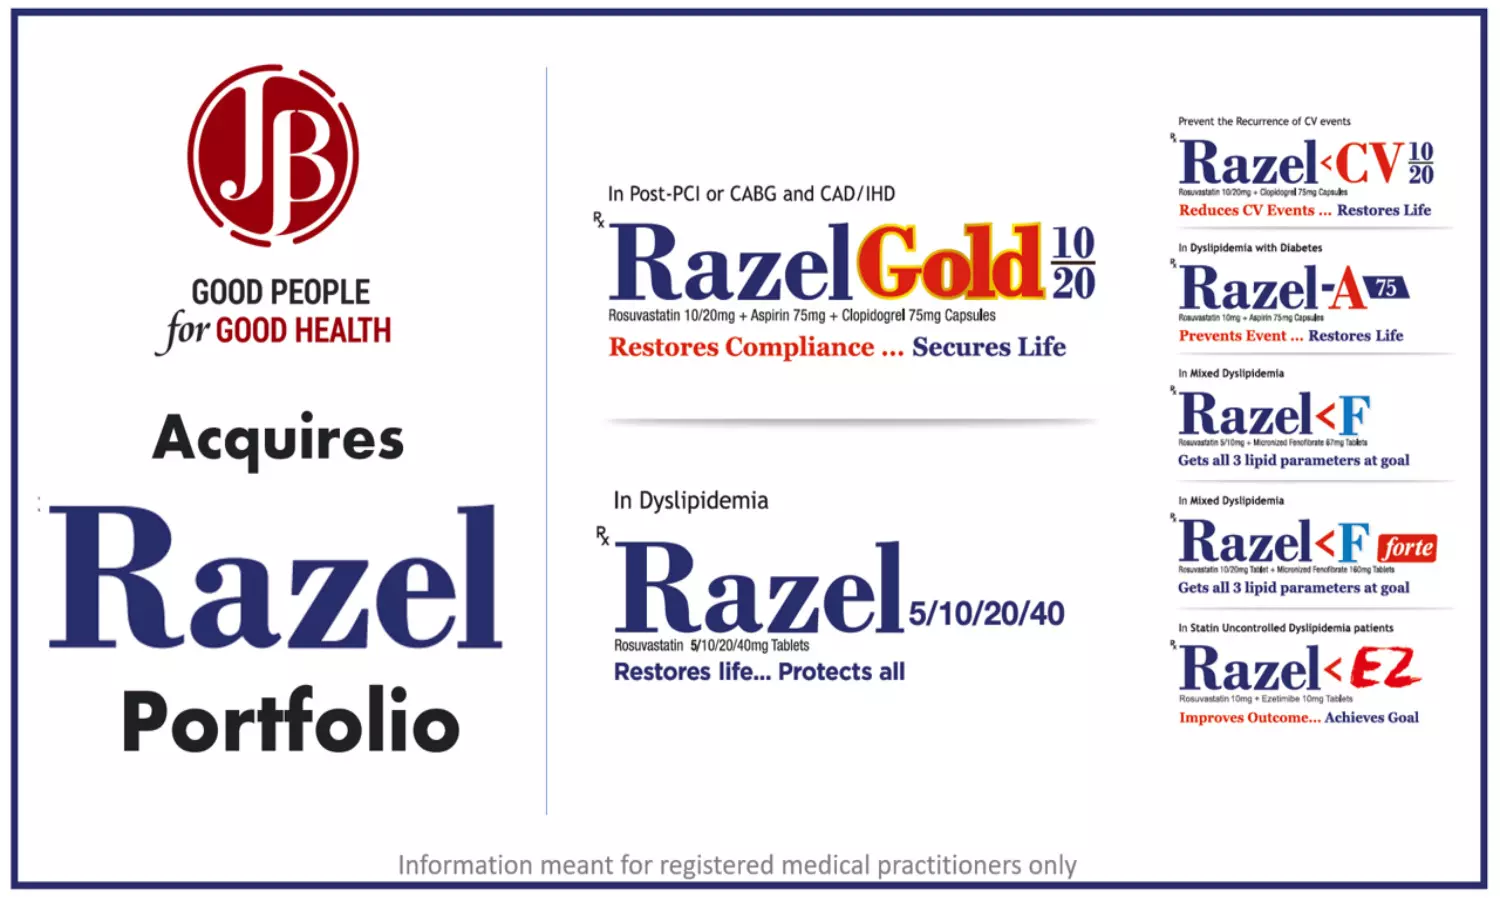 JB Pharma forays into Statin segment, acquires Razel franchise from Glenmark for Rs 314 crore